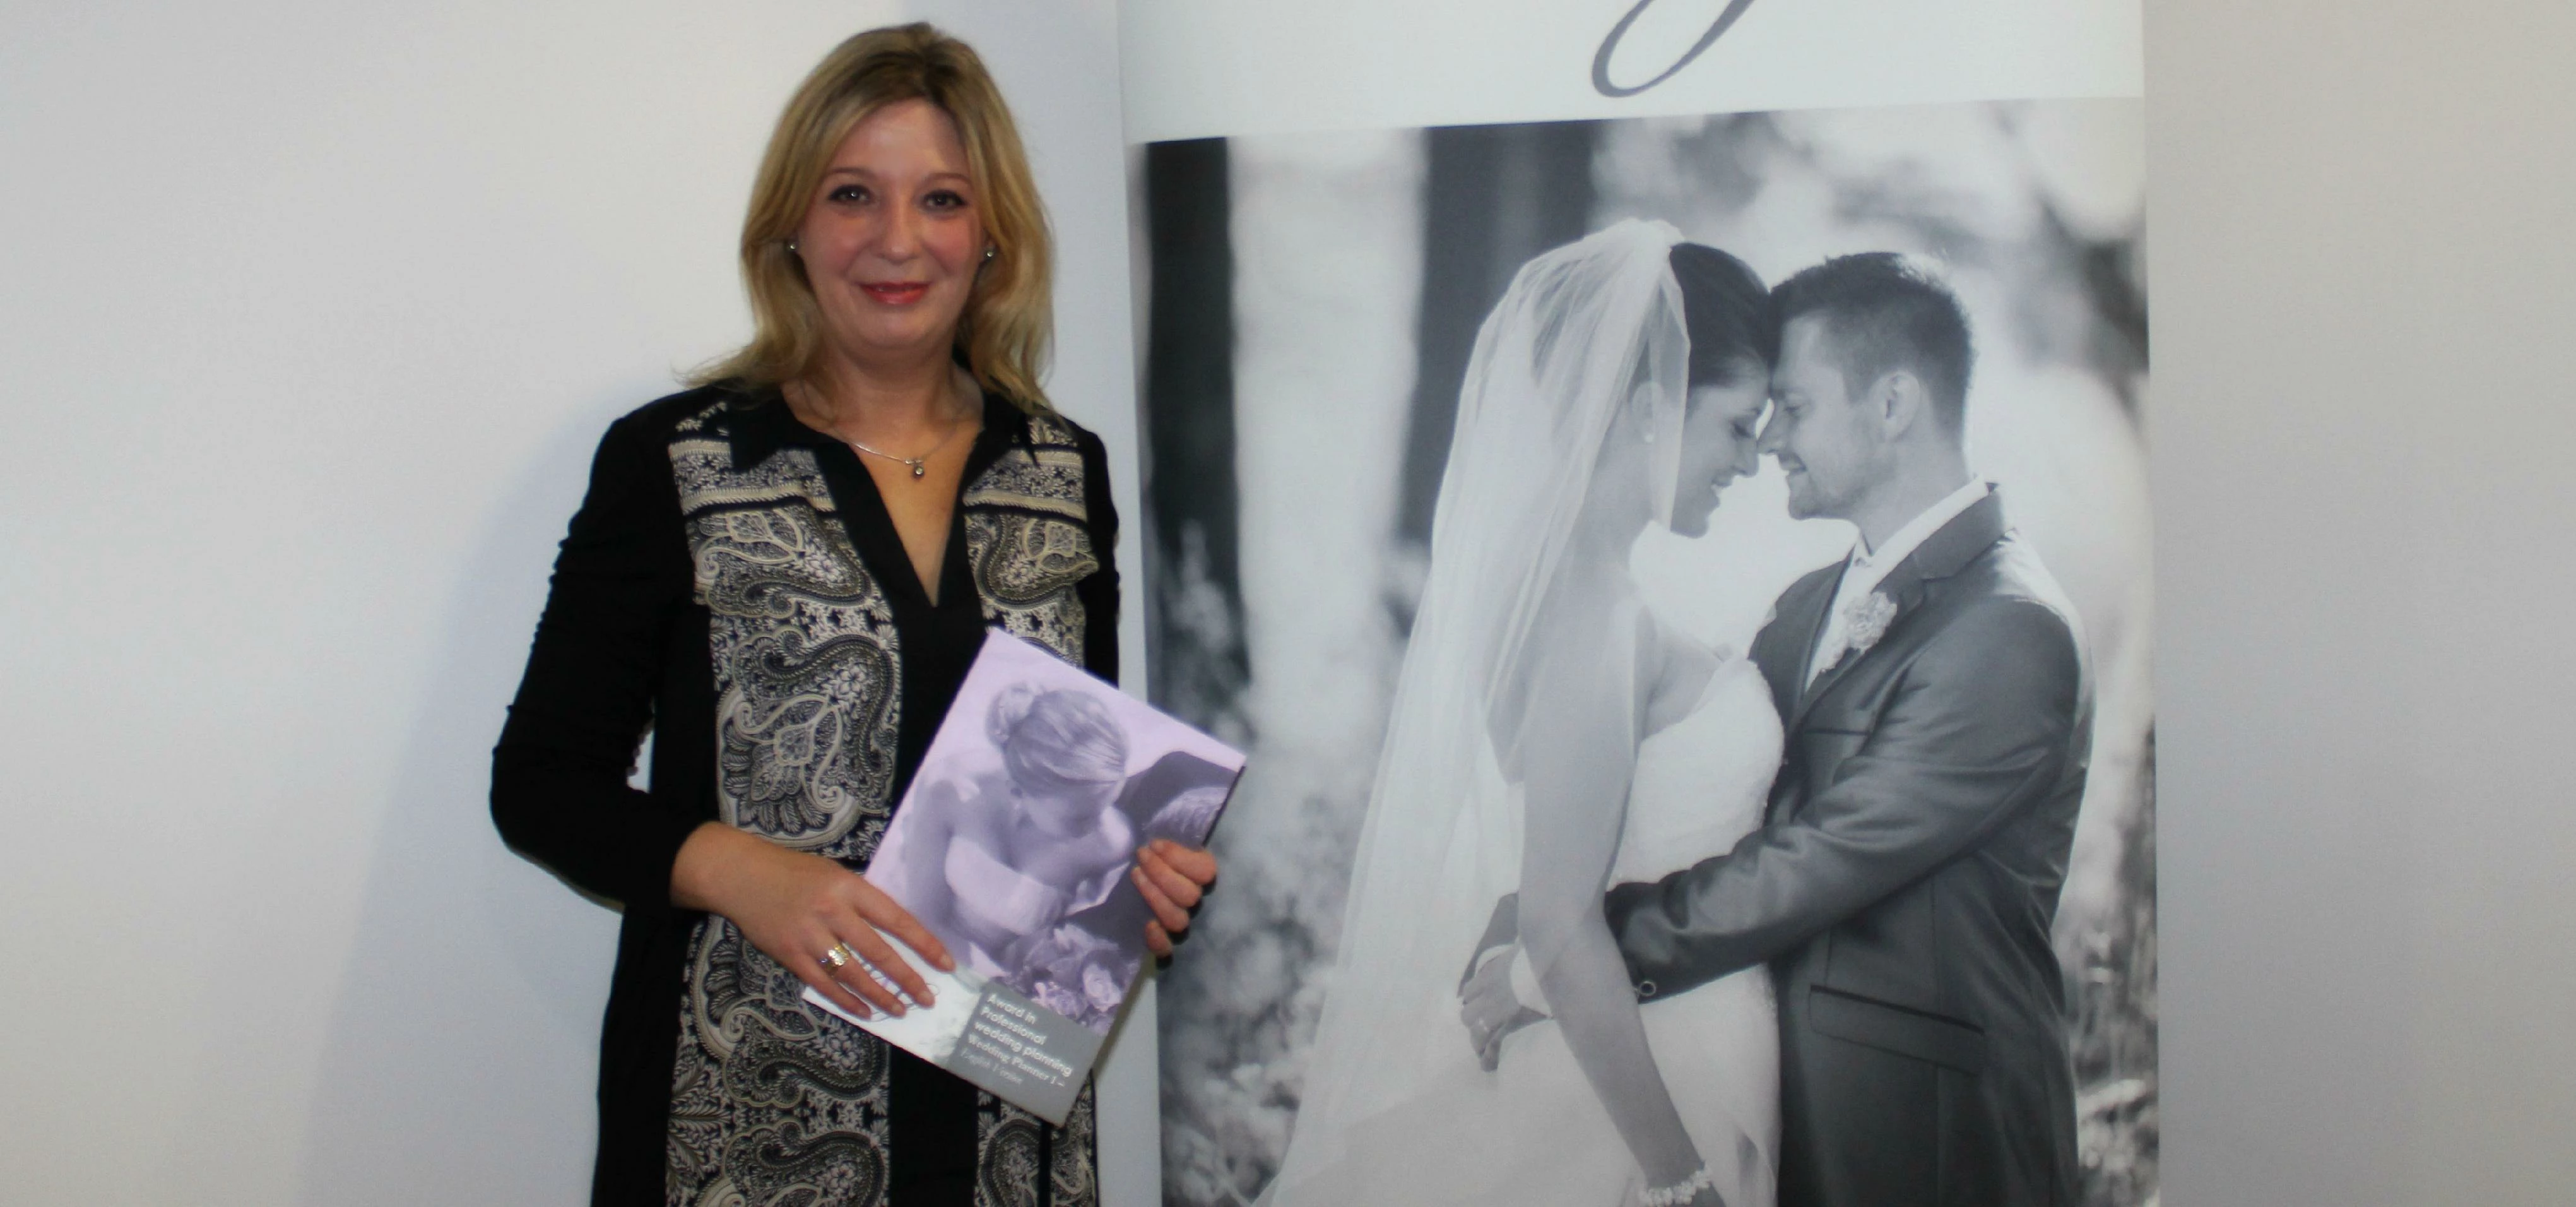 Director of Wedding Planners Guild UK Yvonne Bennett